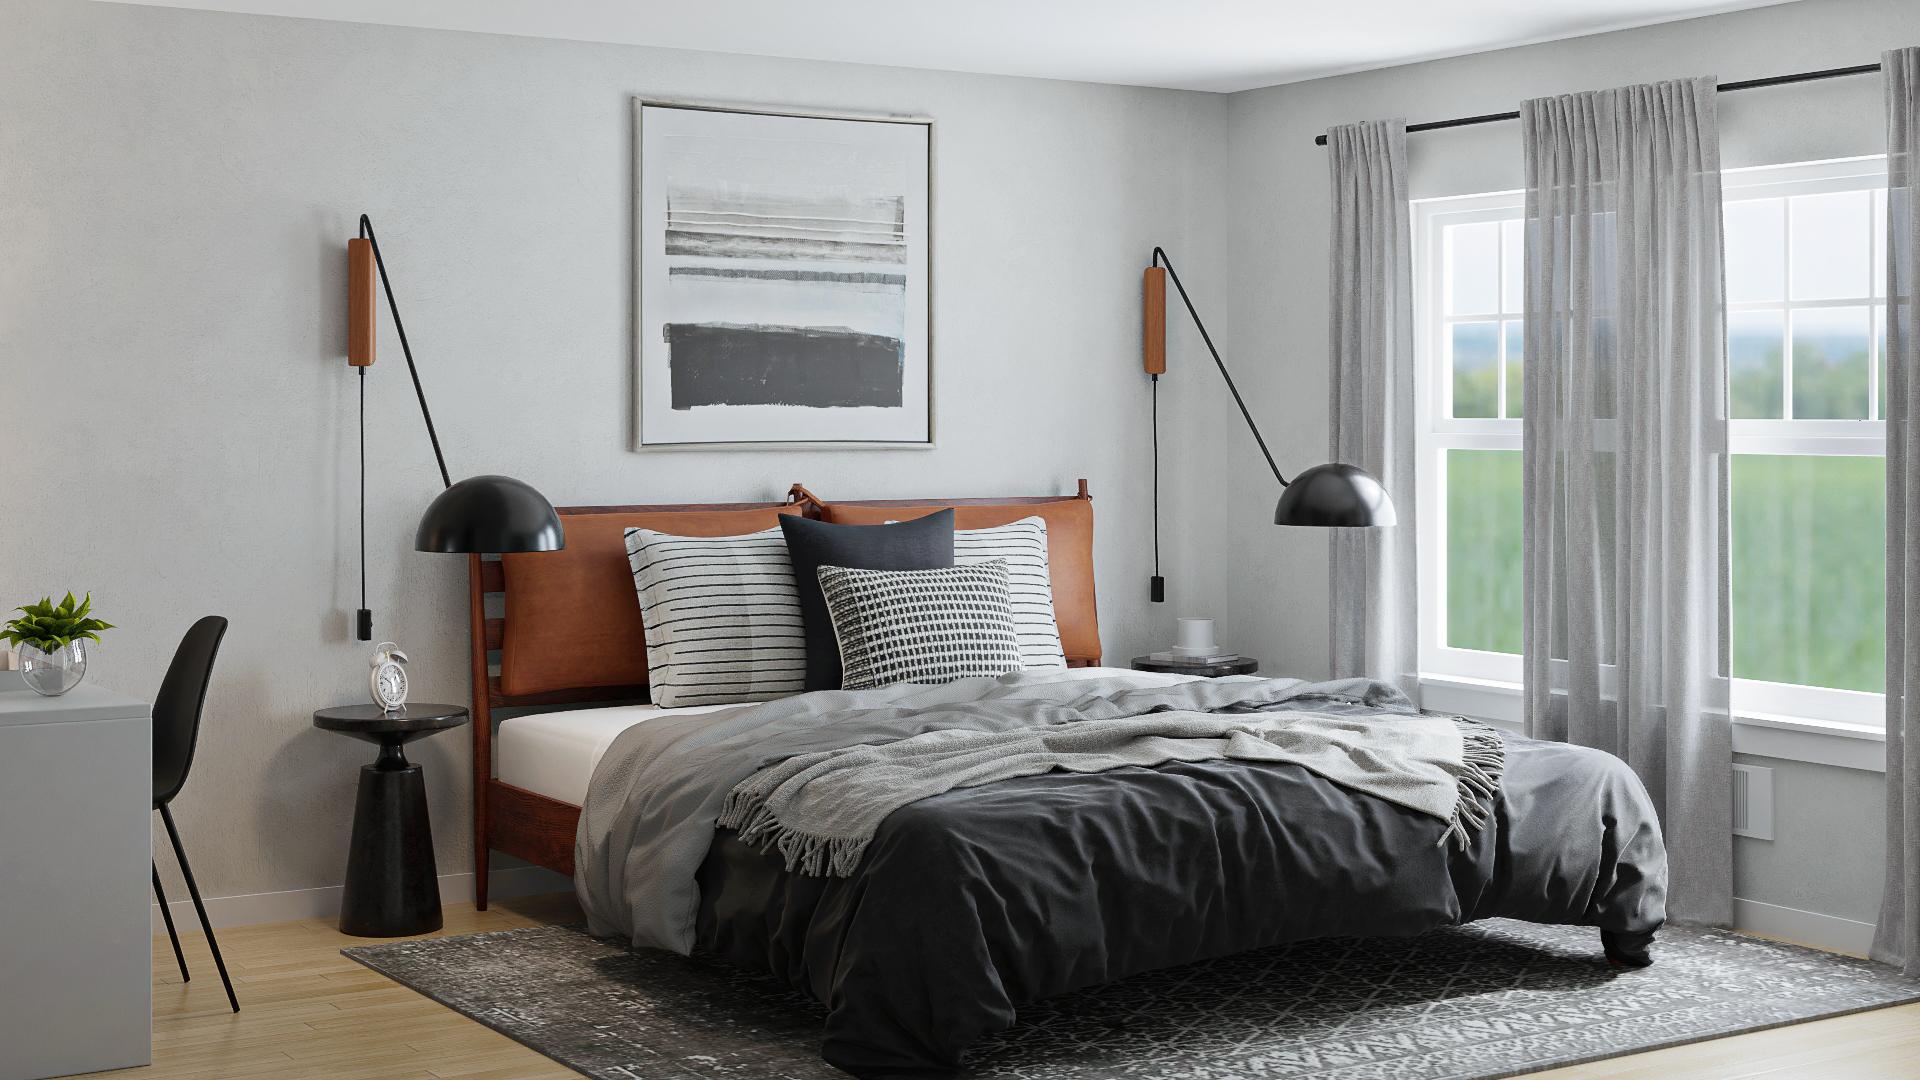 An Industrial Bedroom Boasting In Gray Hues